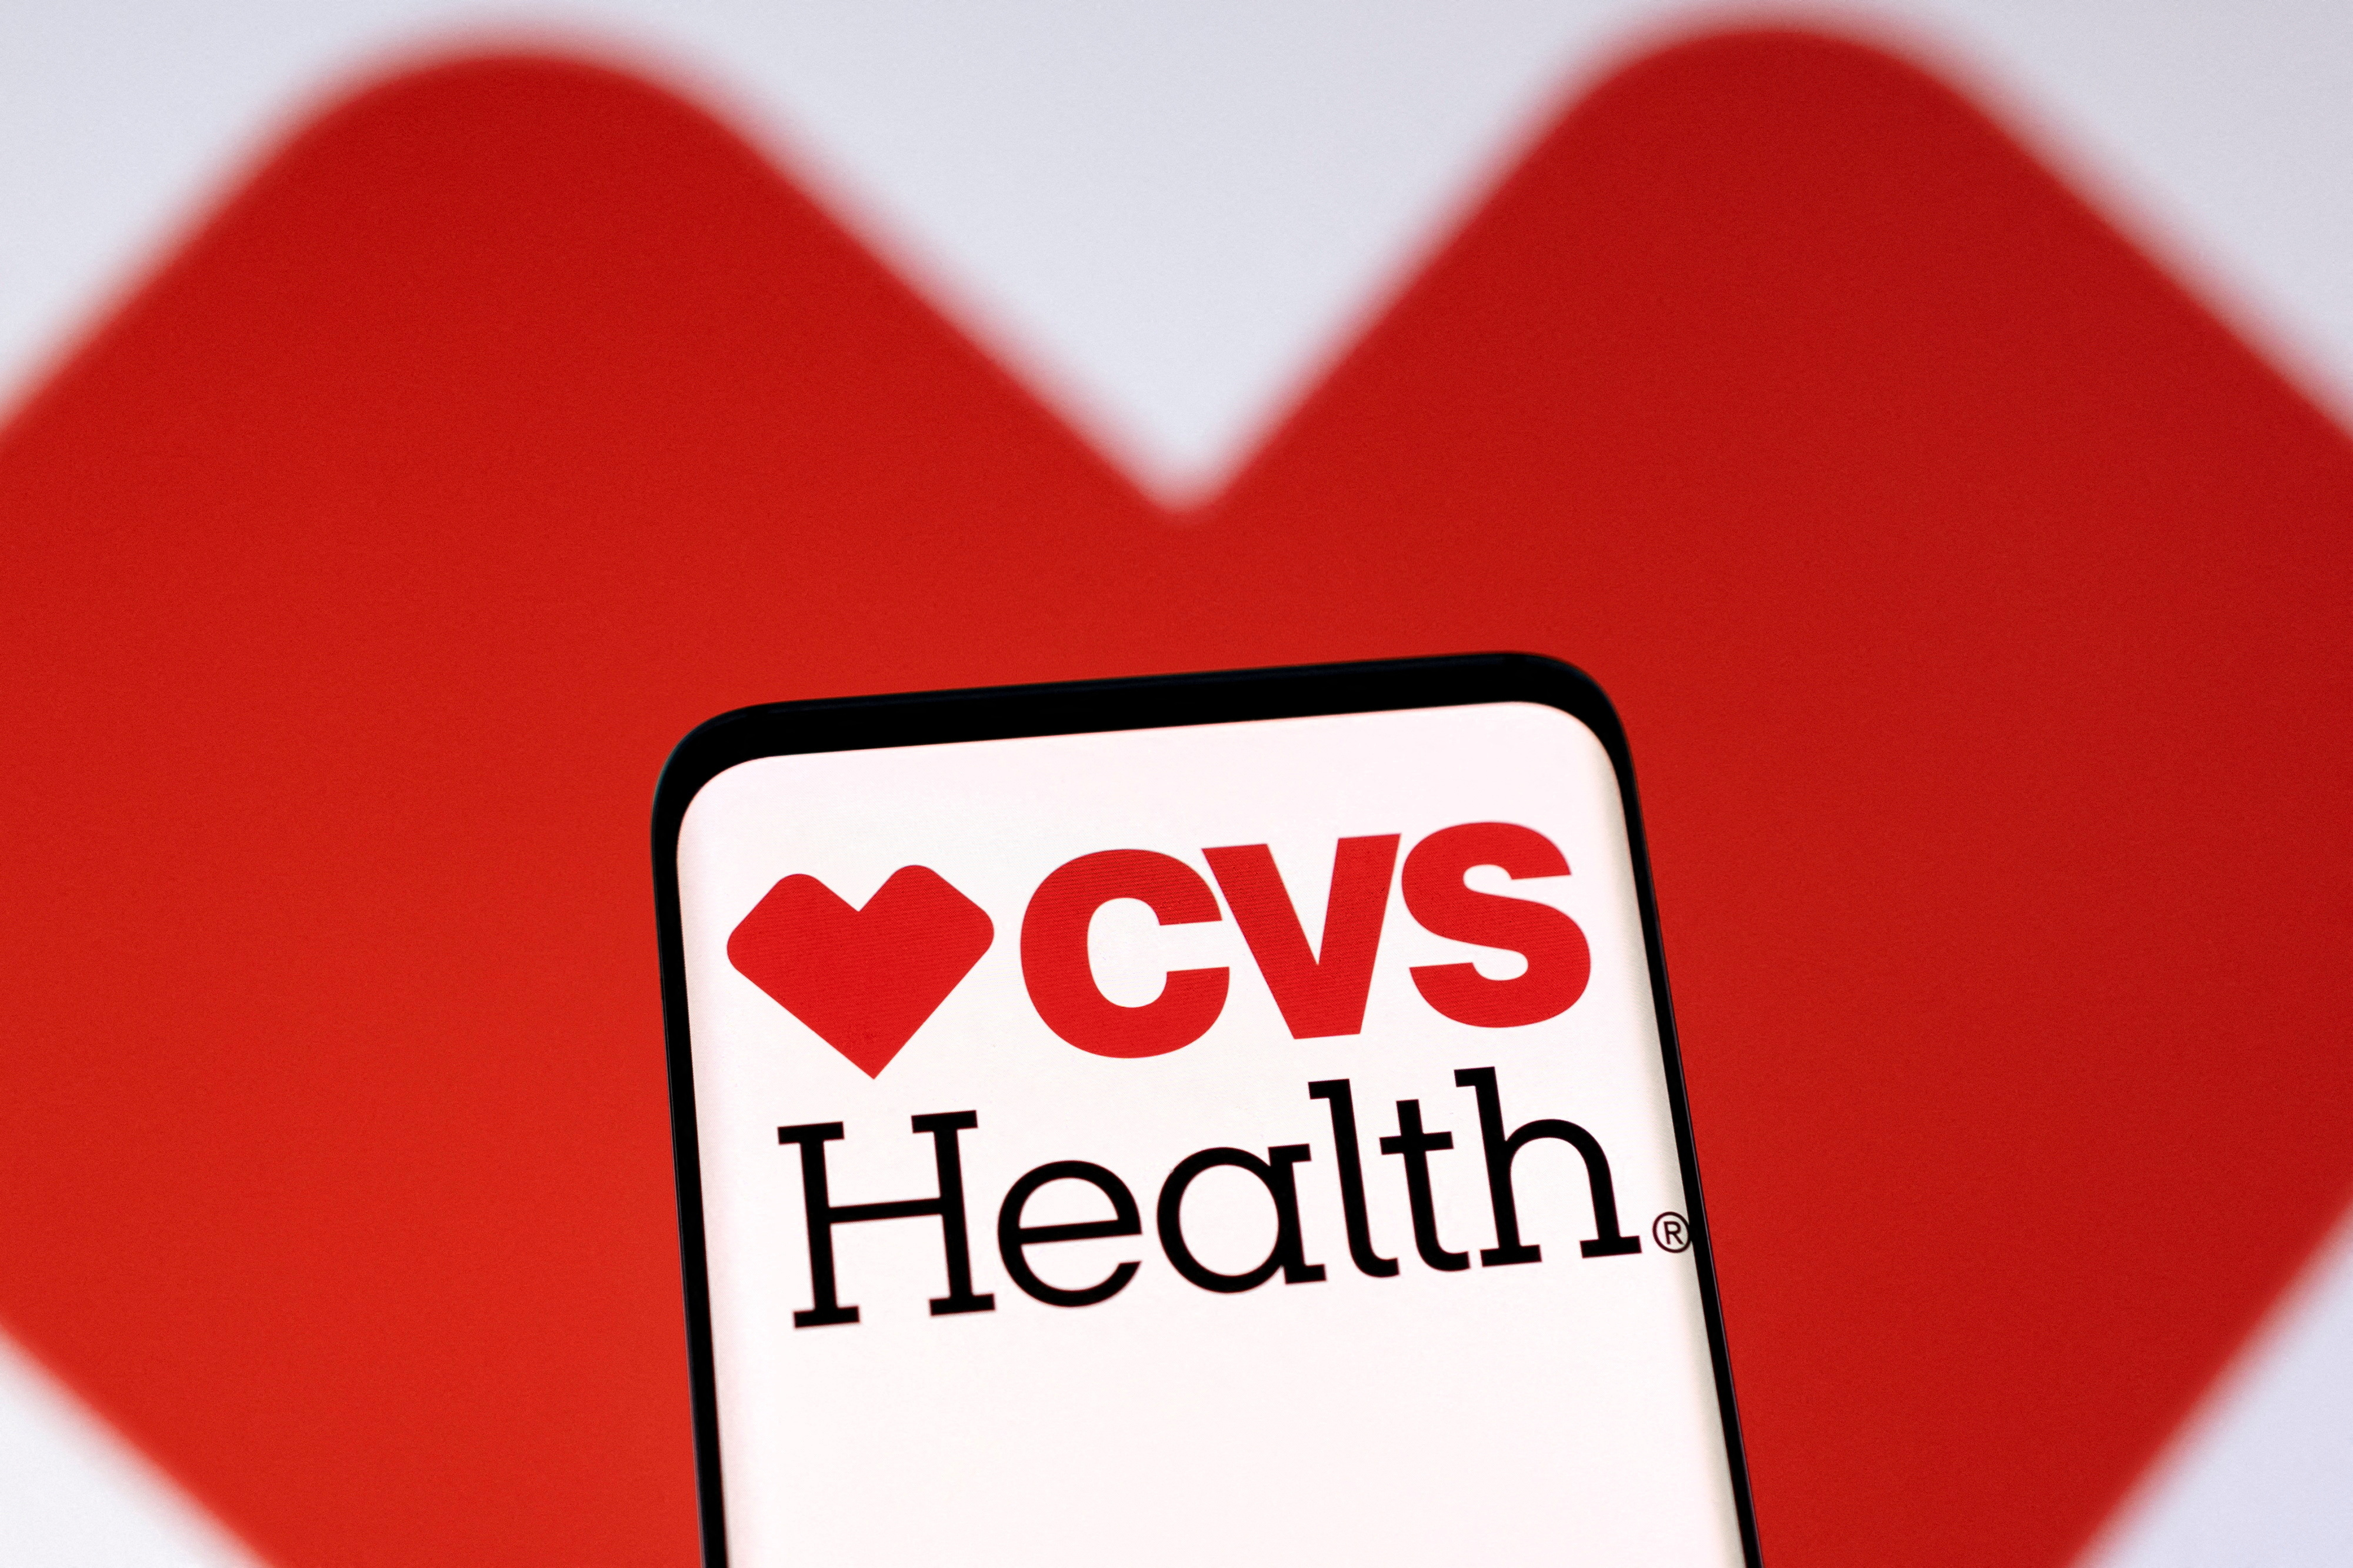 Illustration shows CVS Health logo